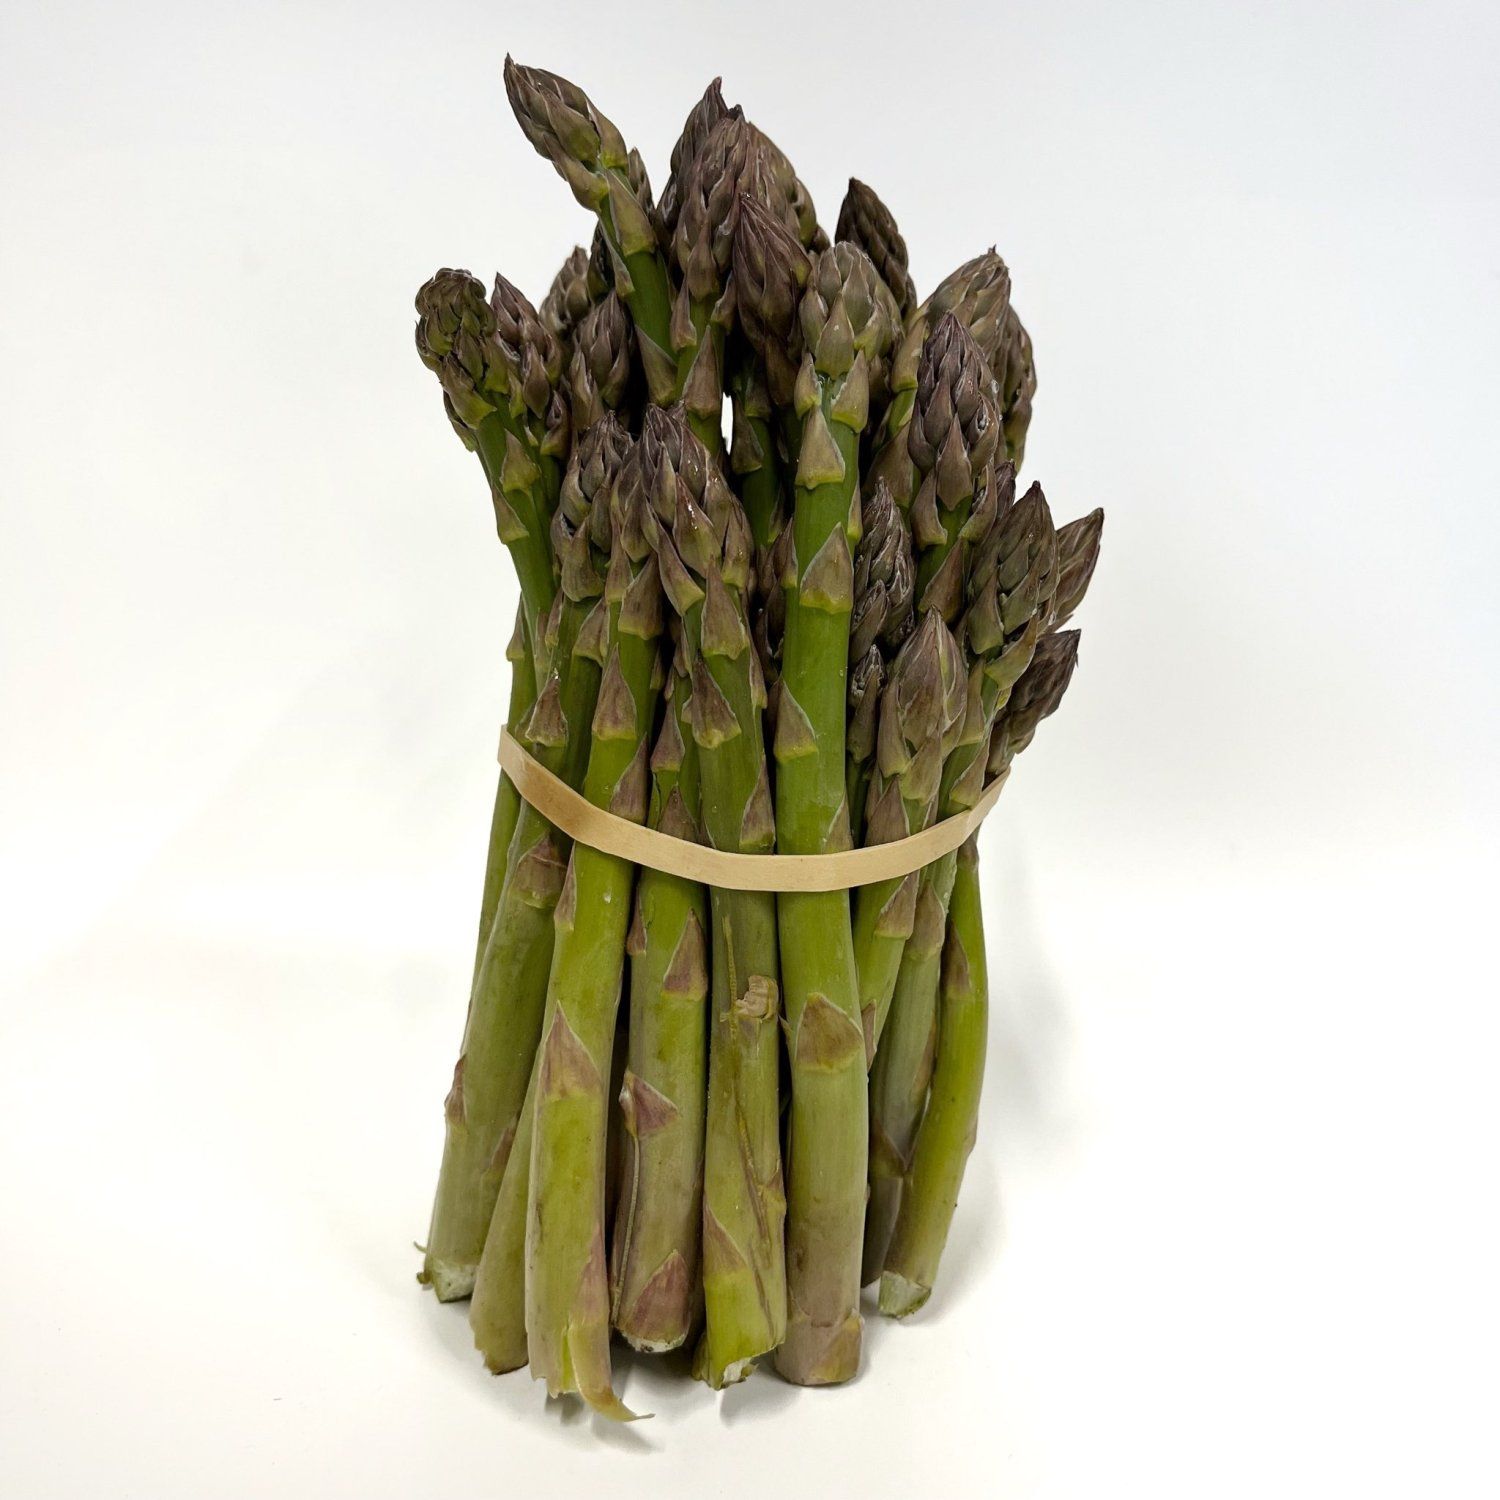 We have asparagus!